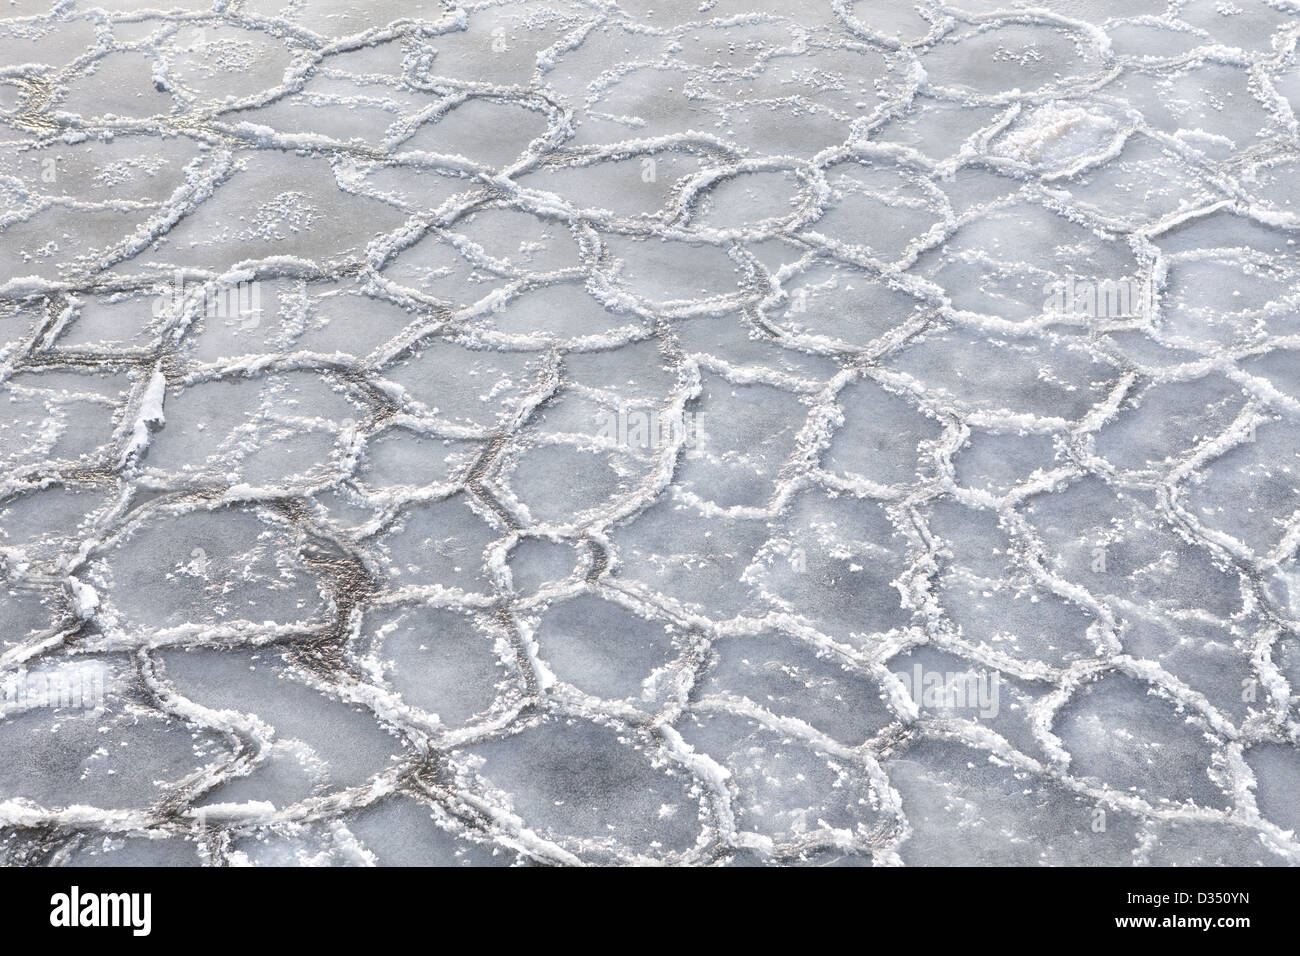 Fozen water surface on the frozen lake Stock Photo